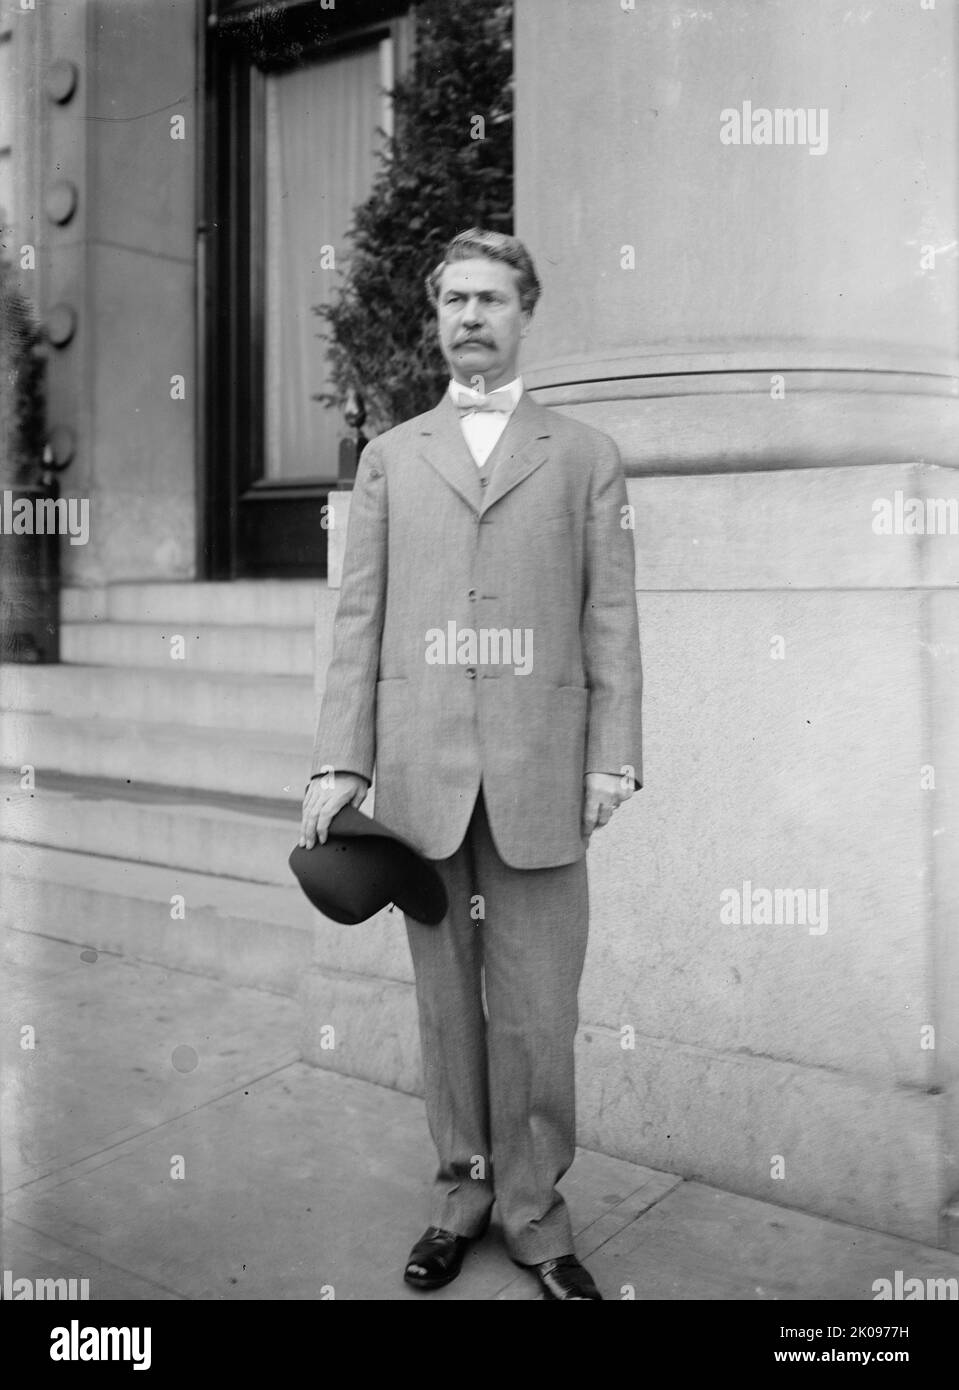 Coleman Livingston Blease, Governor of South Carolina, 1912. [US politician, Governor 1911-1915]. Stock Photo